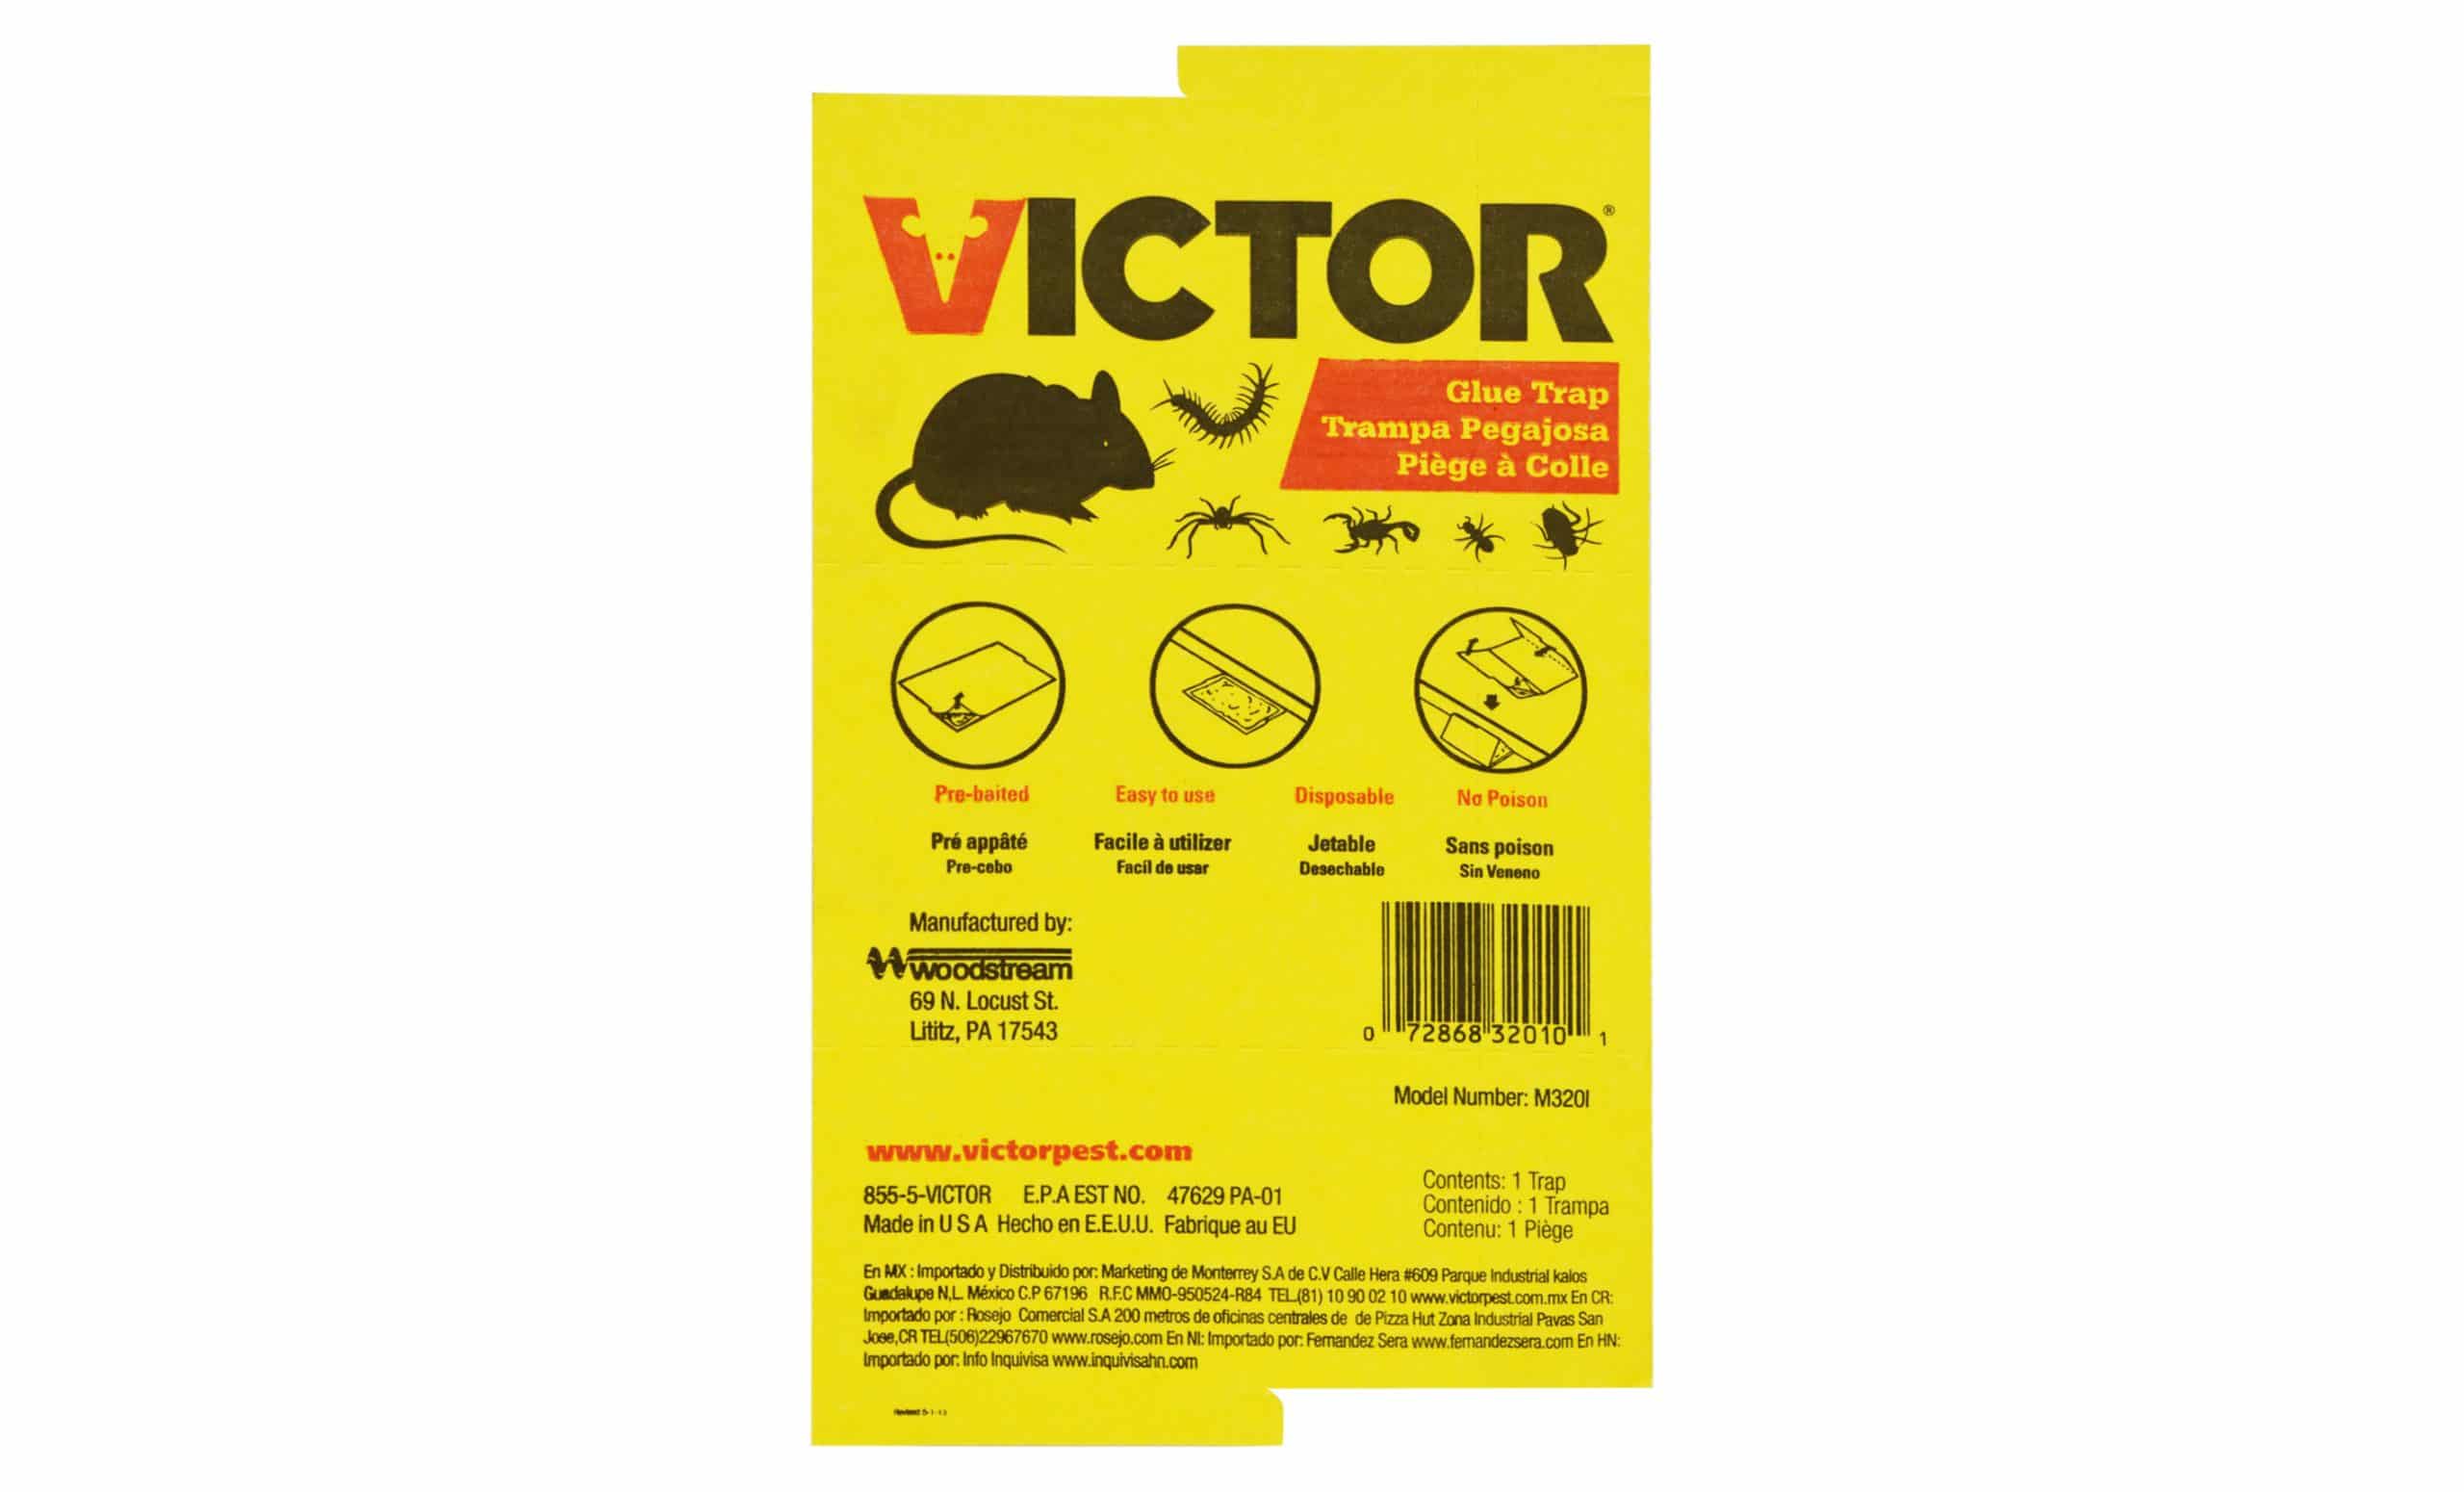 HC67724 - Trampa De Pegamento Para Ratones E Insectos Victor 320I - VICTOR